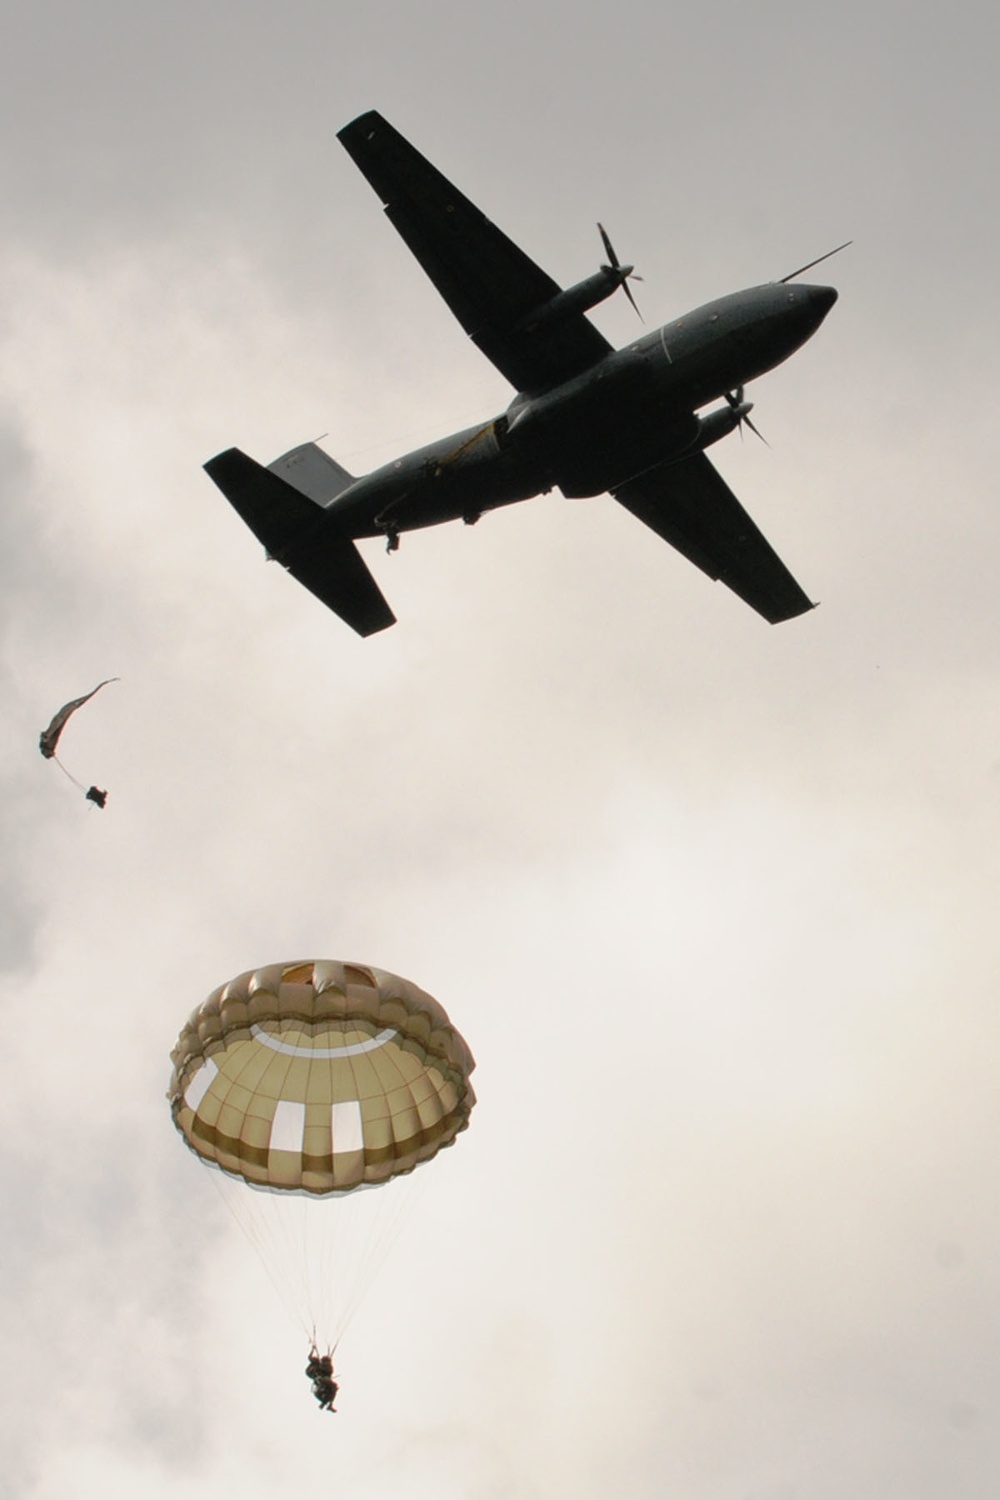 Exercise Swift Response multinational airborne drop